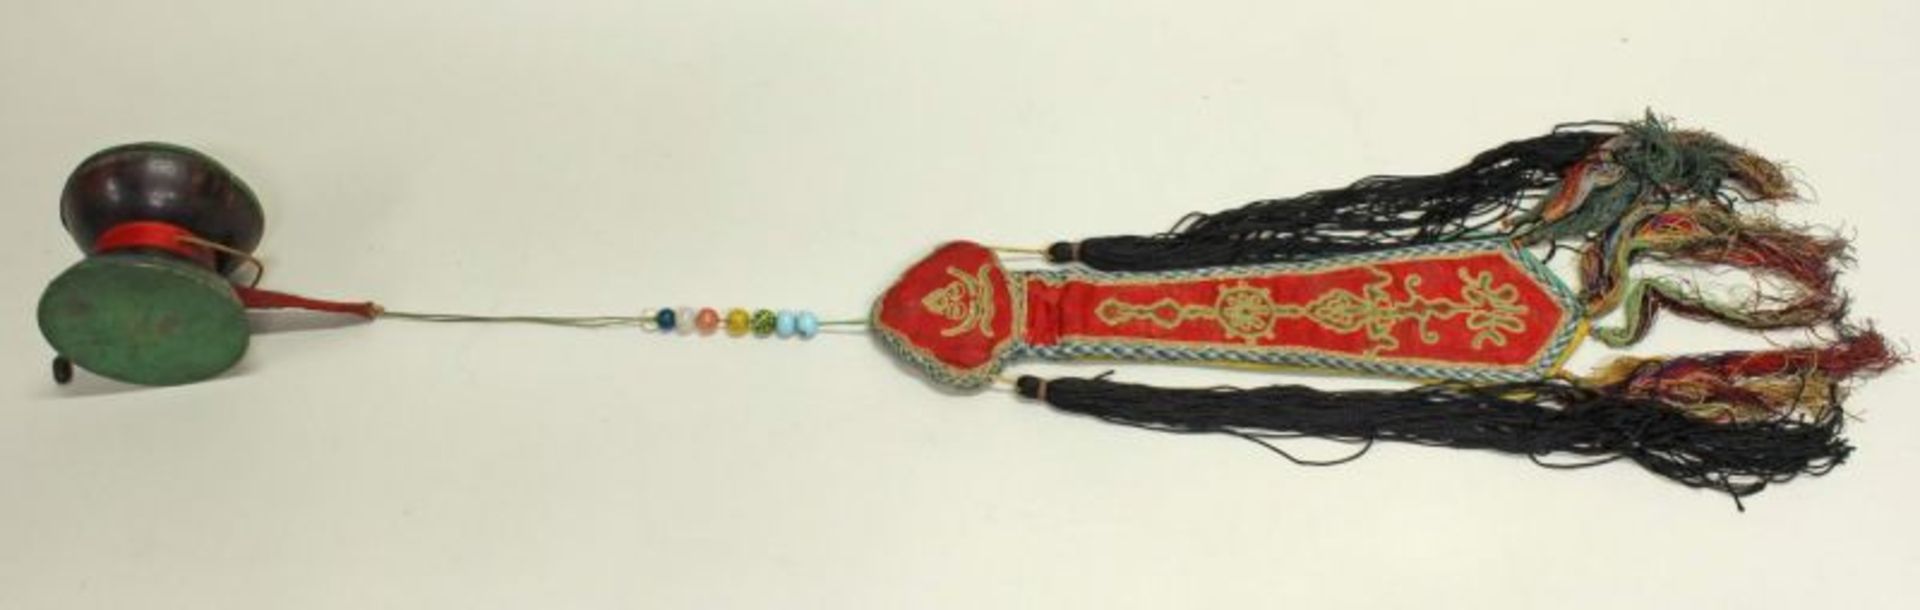 Handtrommel, Tibet, 20. Jh., aus Kokosnuss, grüne Membran, Glasperlen, buntes Banner aus